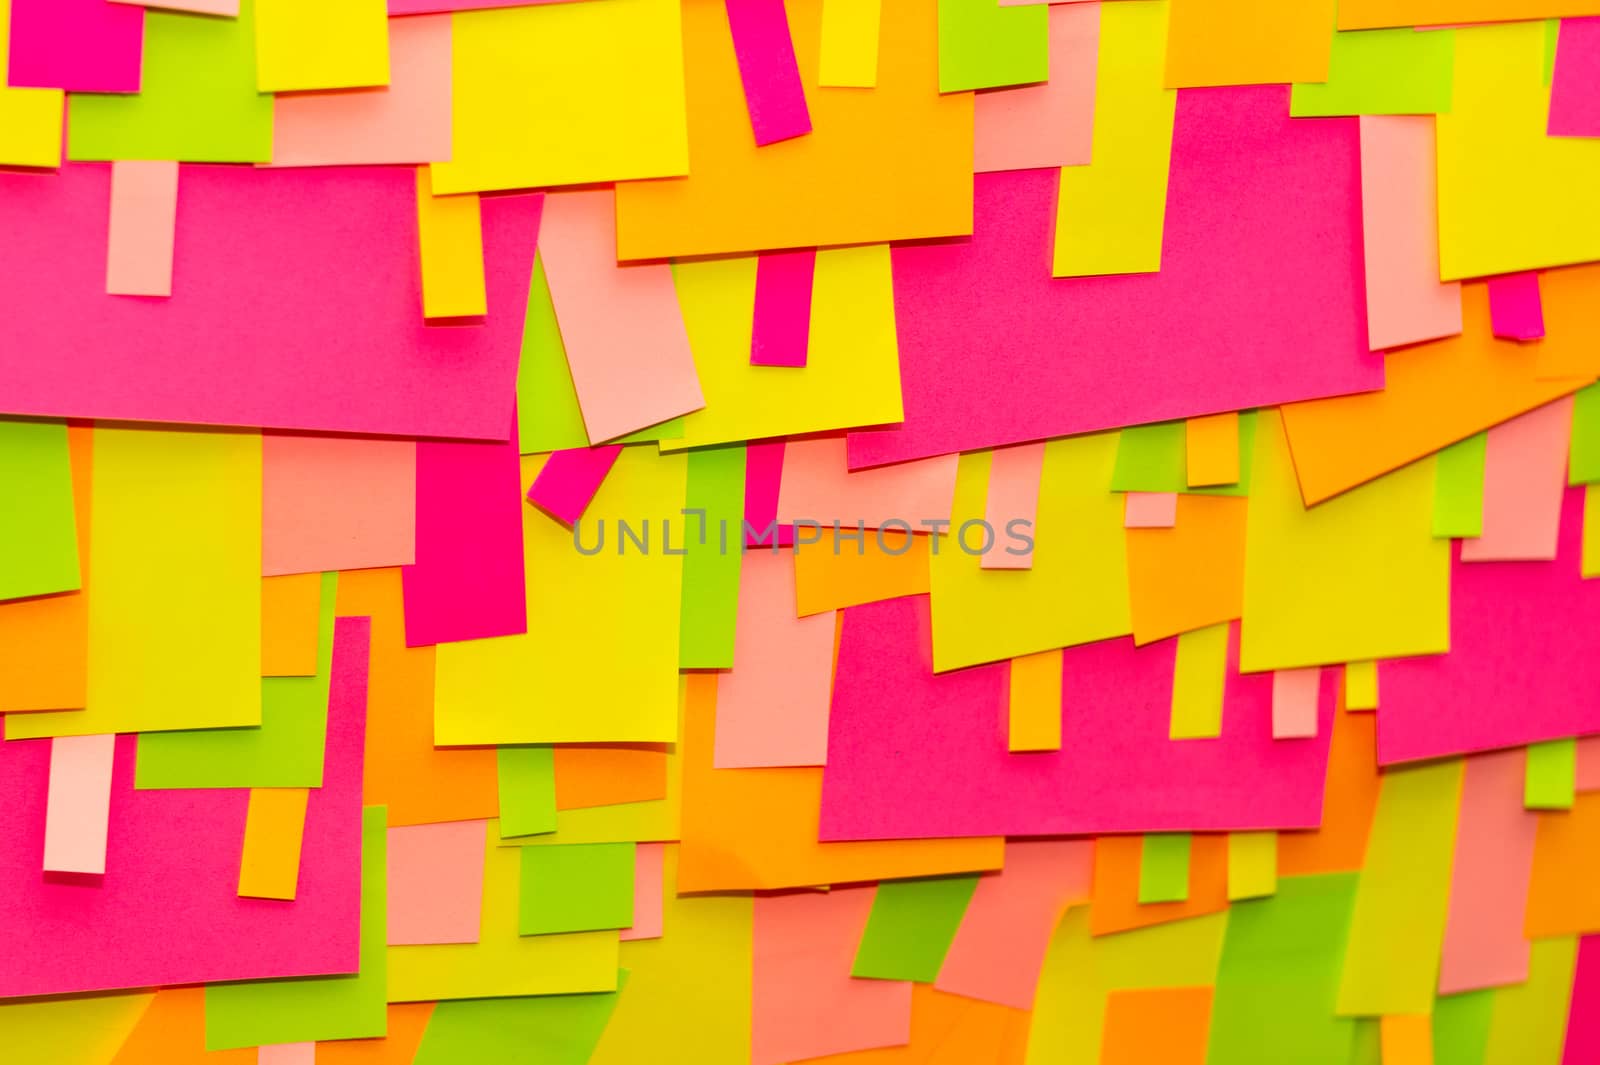 Bright multi-colored stickers on the office white board.